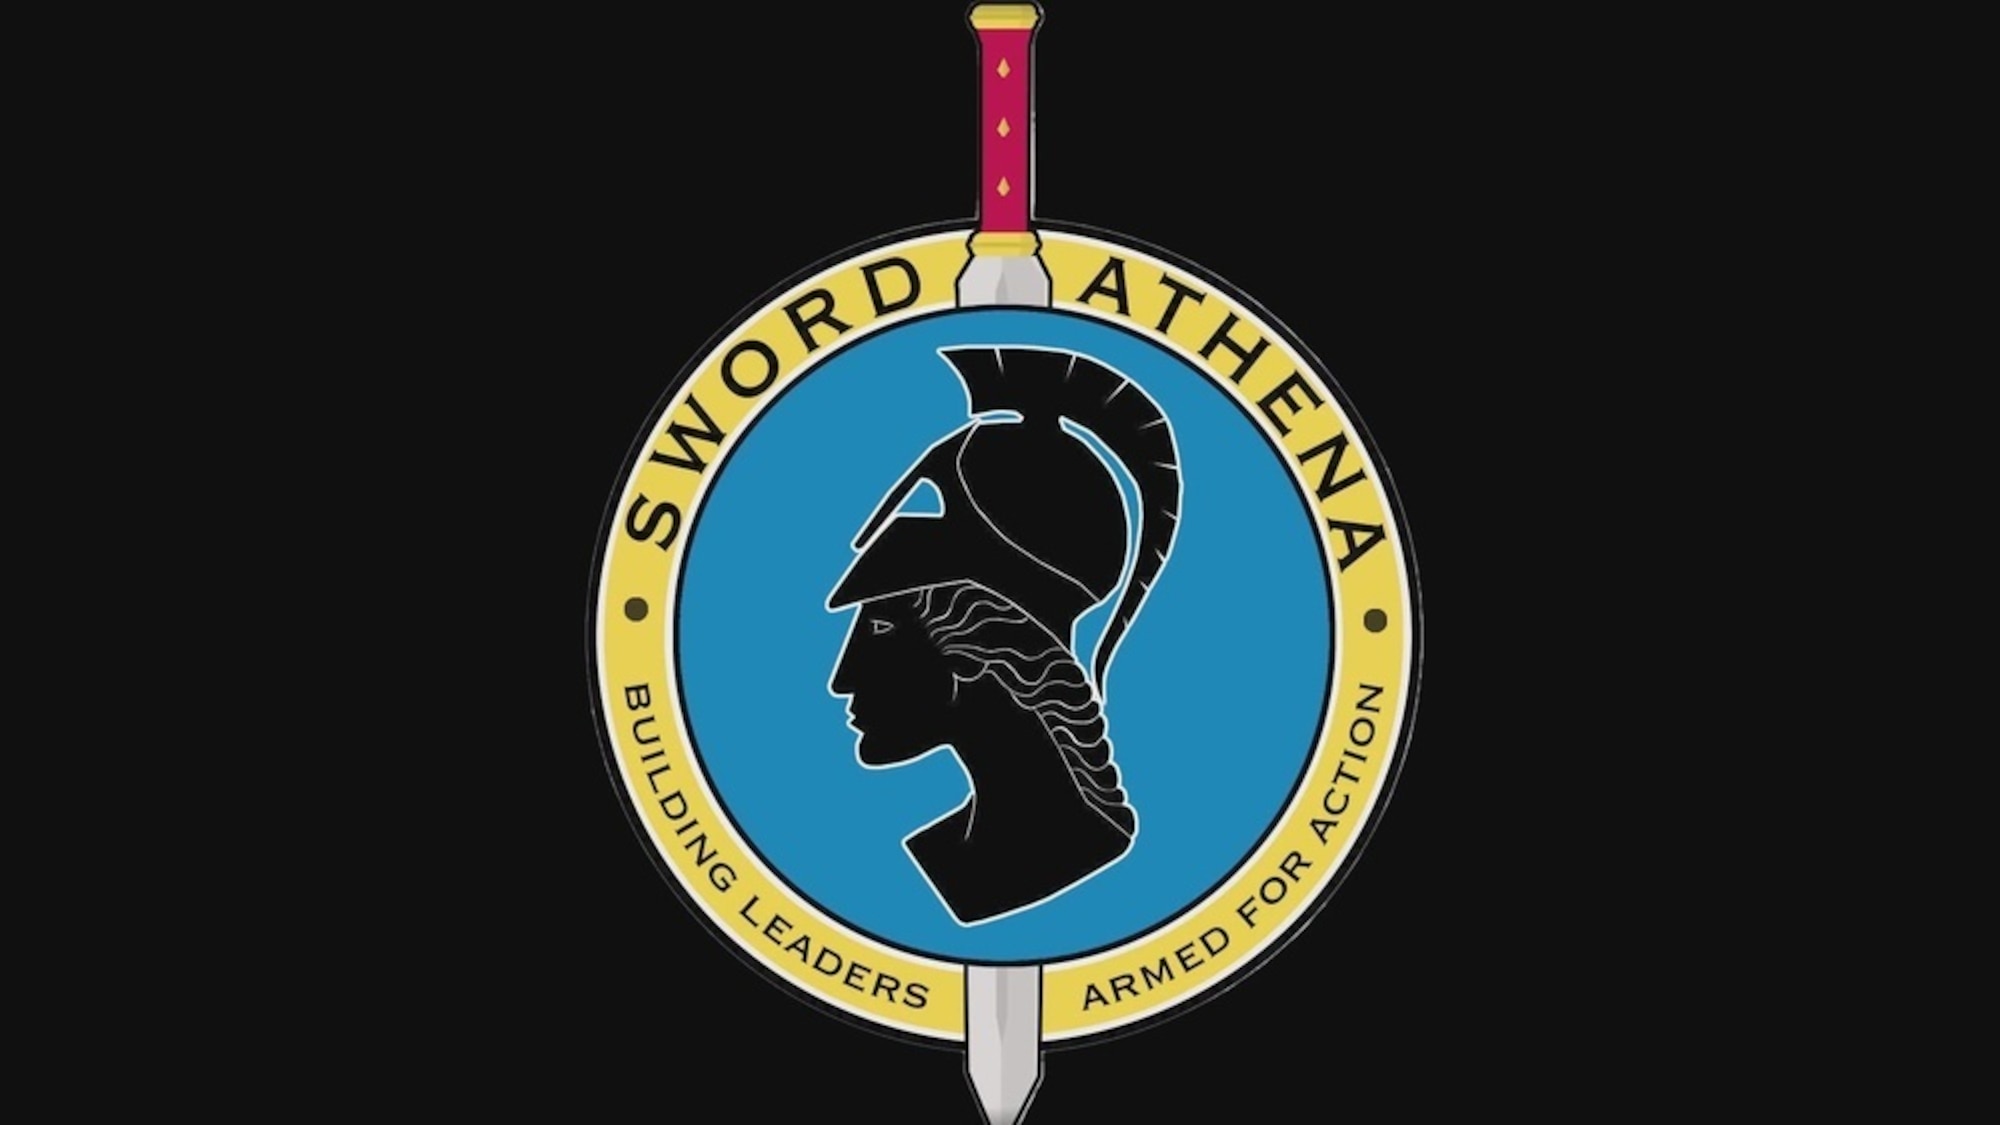 Sword Athena graphics